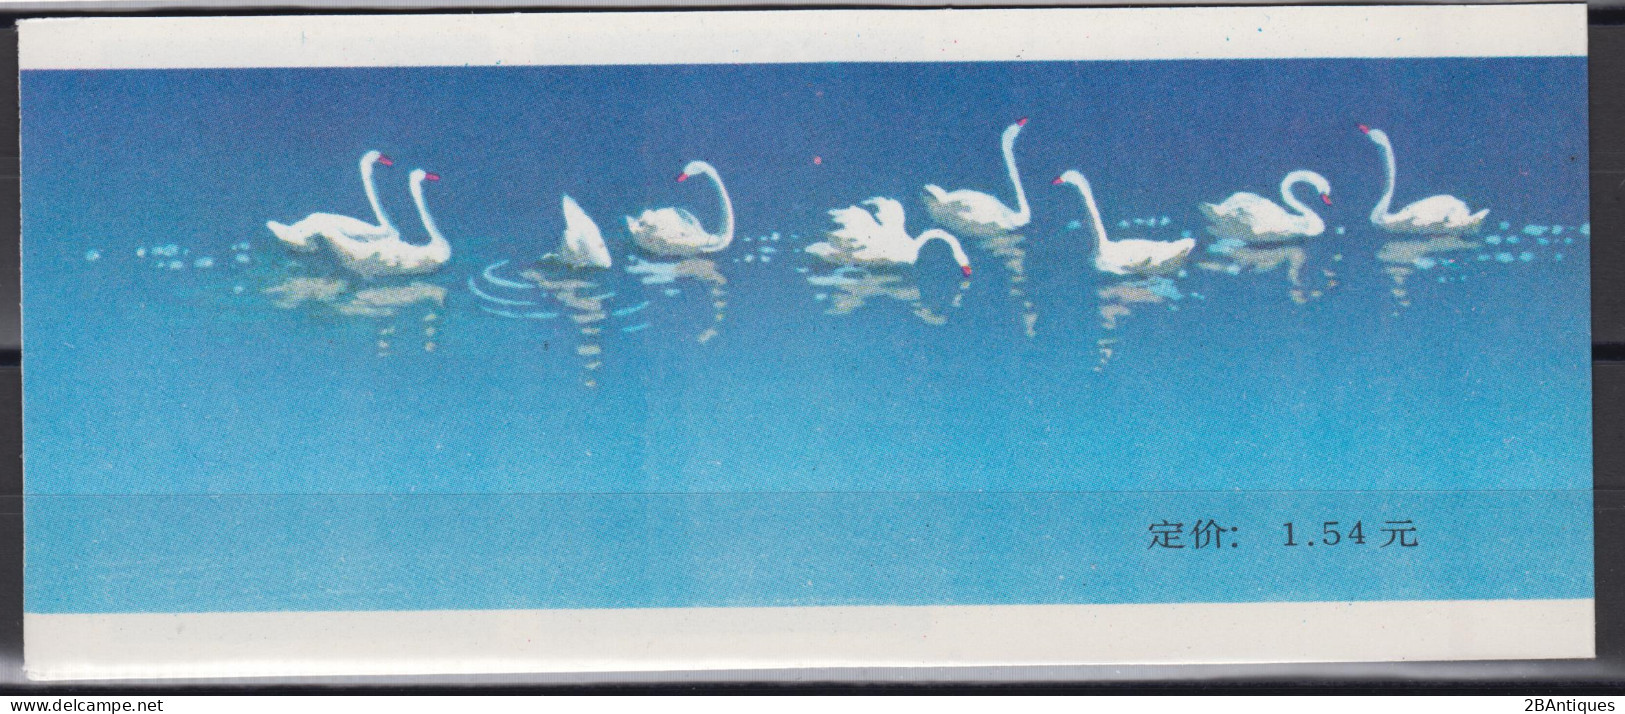 PR CHINA 1983 - Stamp Booklet Swan MNH** XF OG - Nuovi